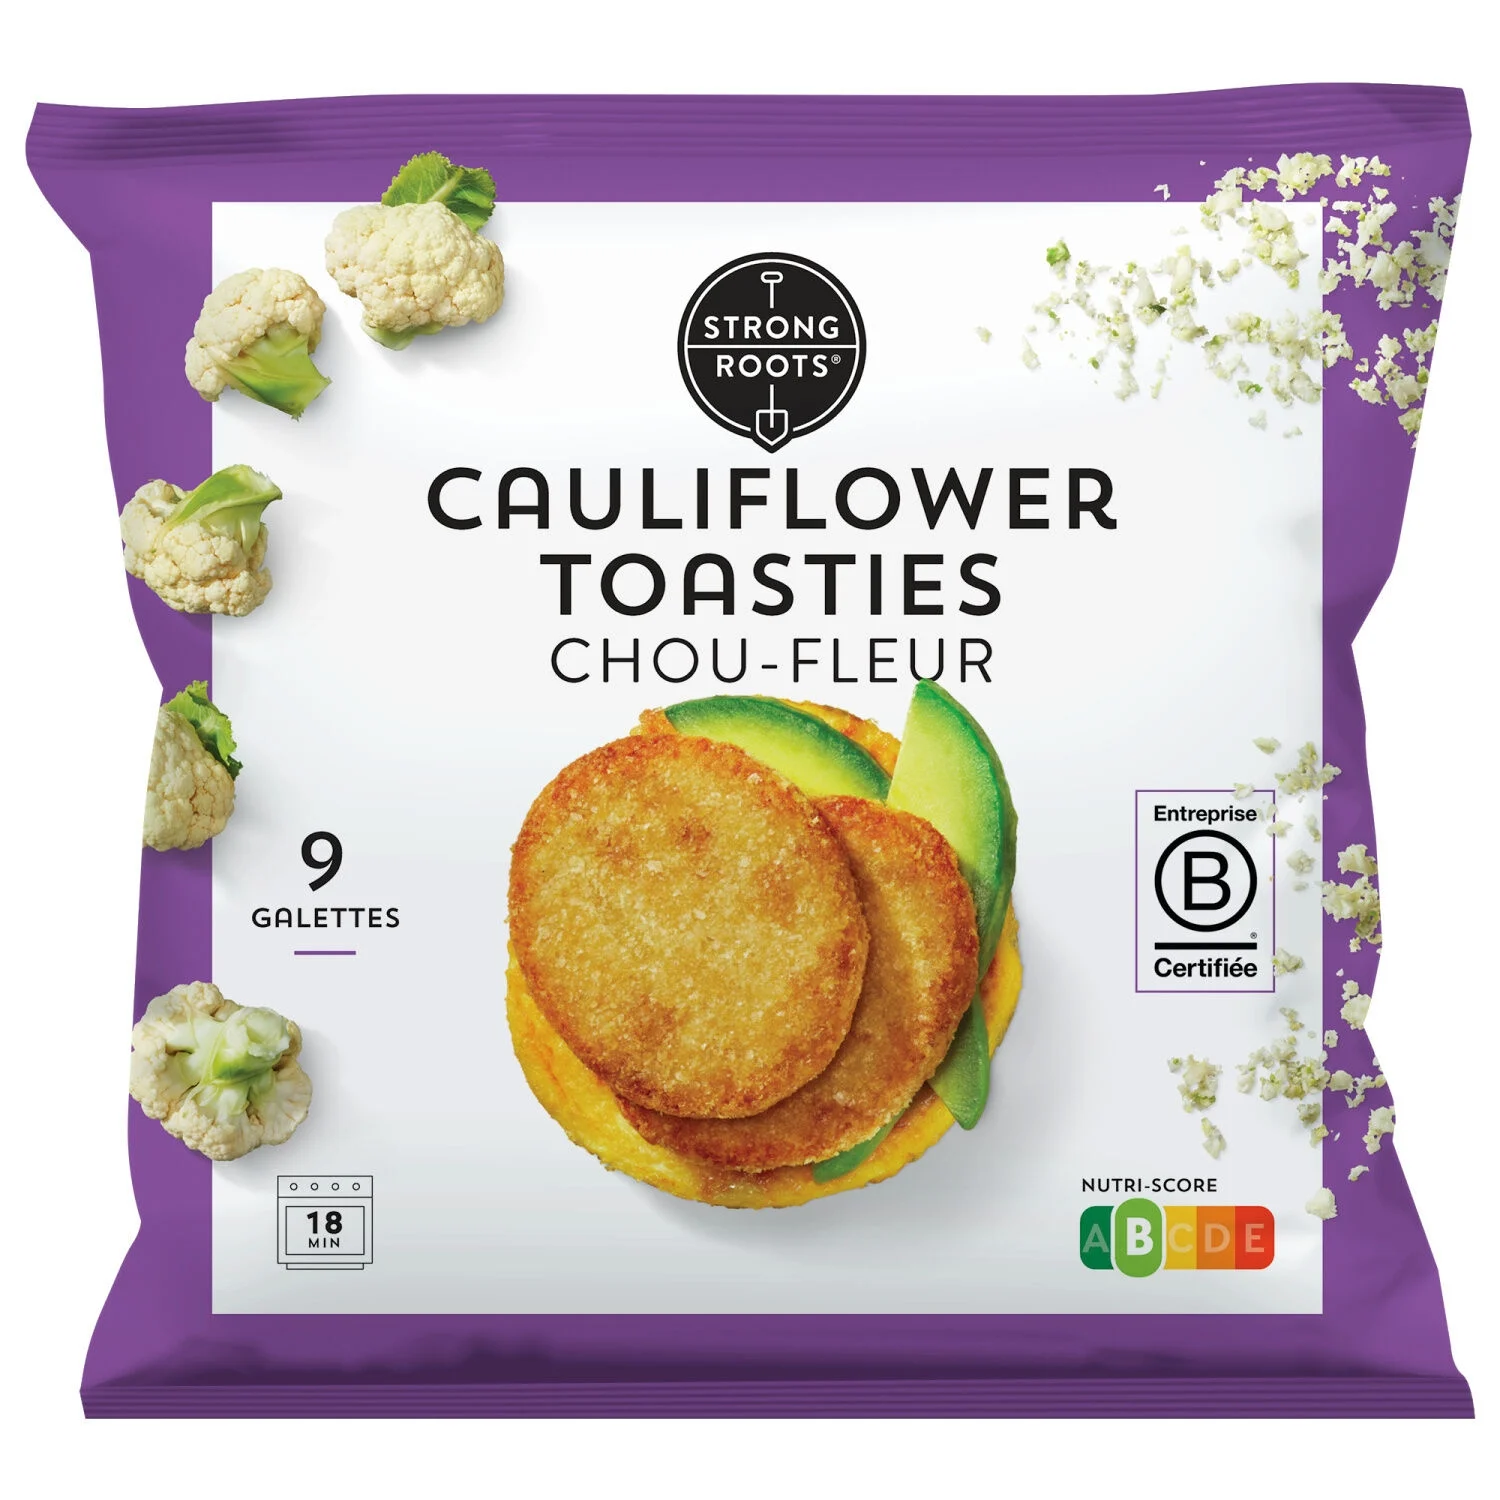 375g Cauliflower Toasties